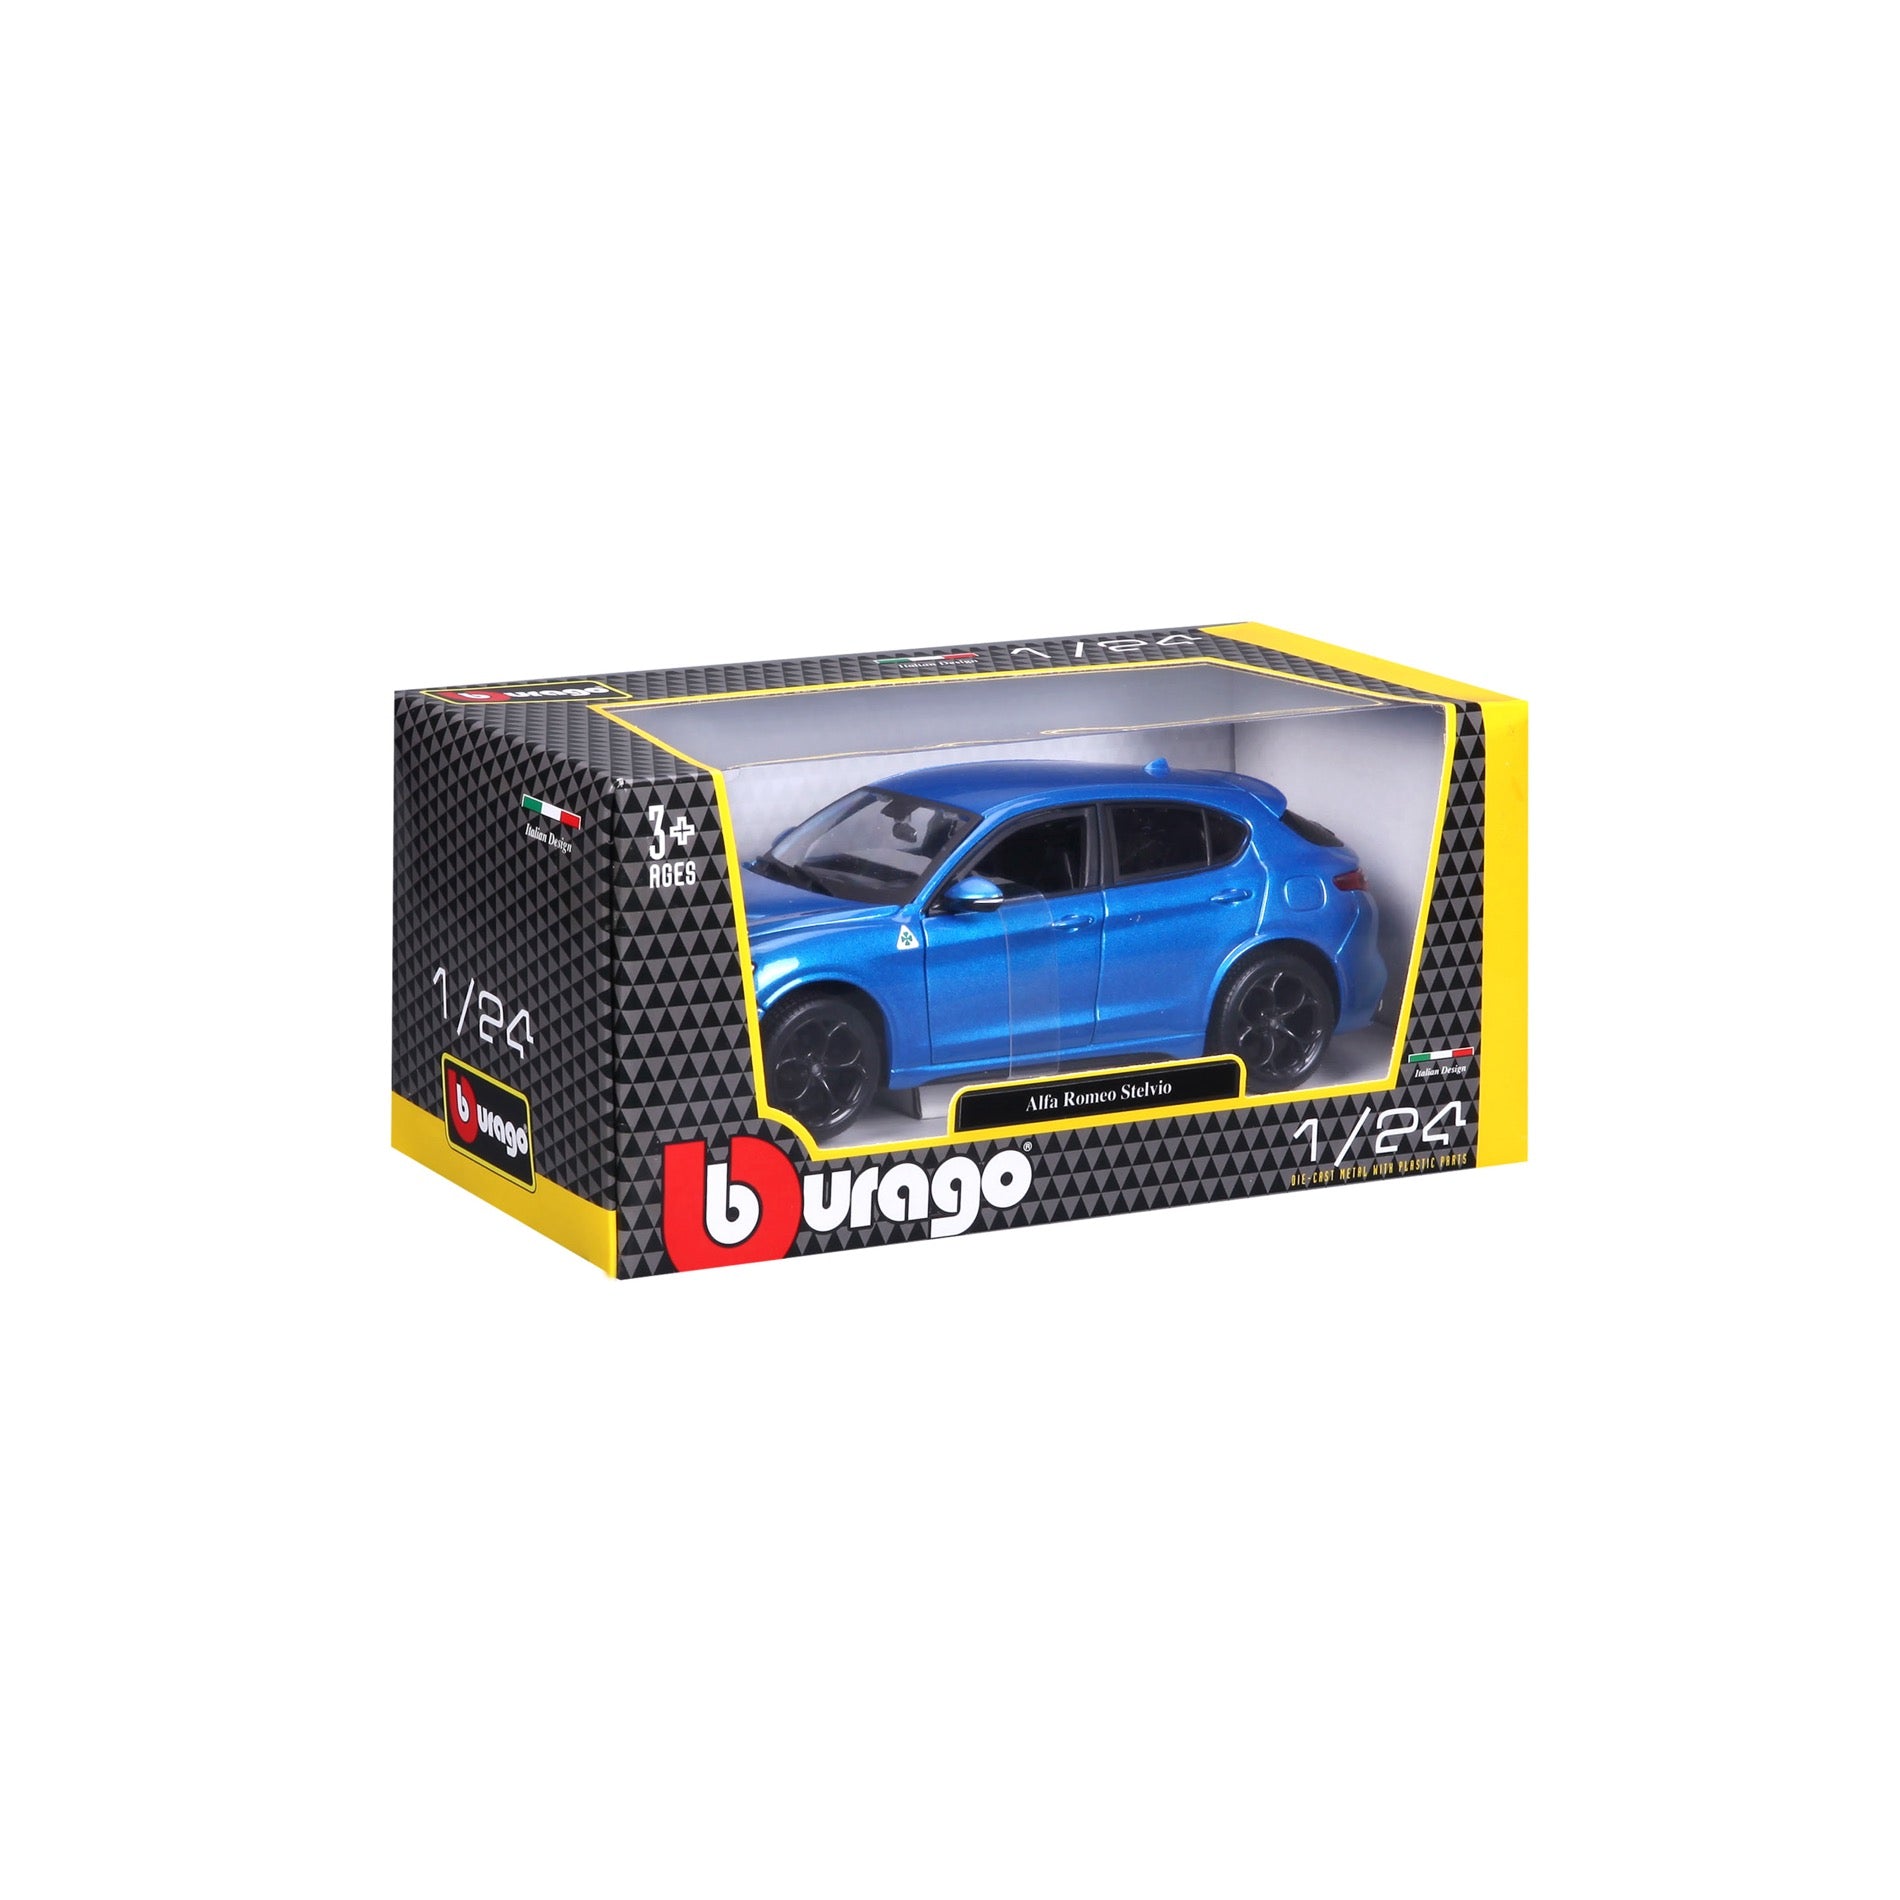 18-21086  Bburago - Alfa Romeo Stelvio - 1:24